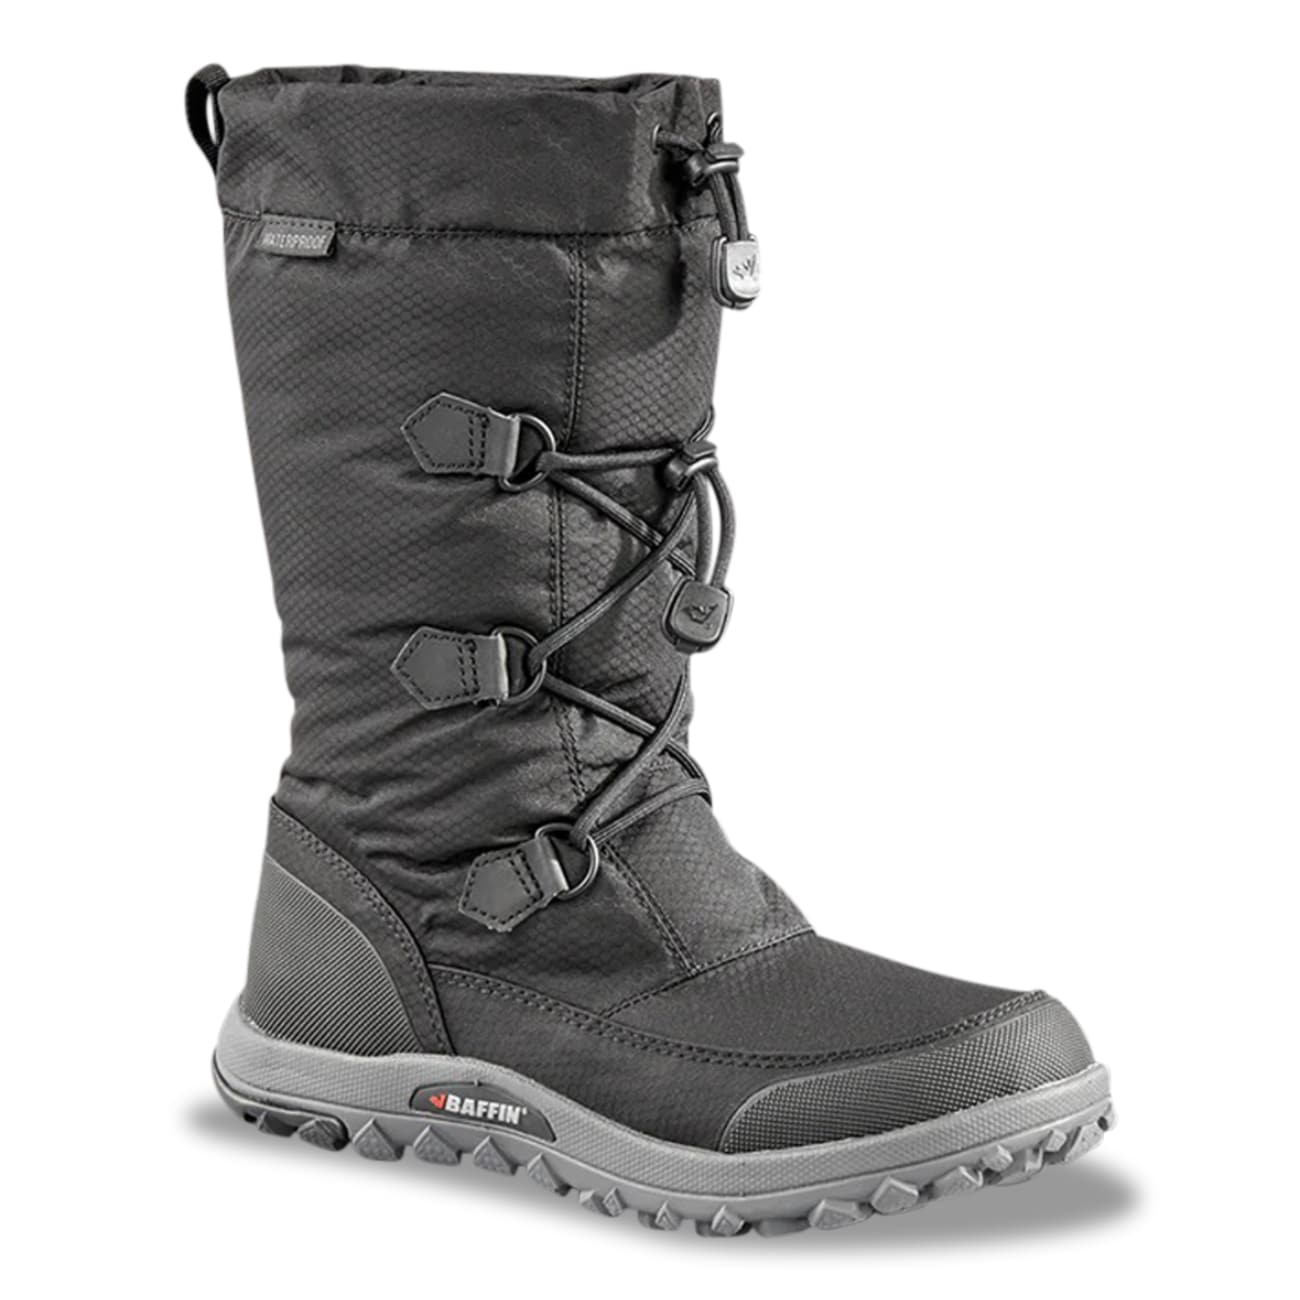 Women's Light Waterproof Winter Boot